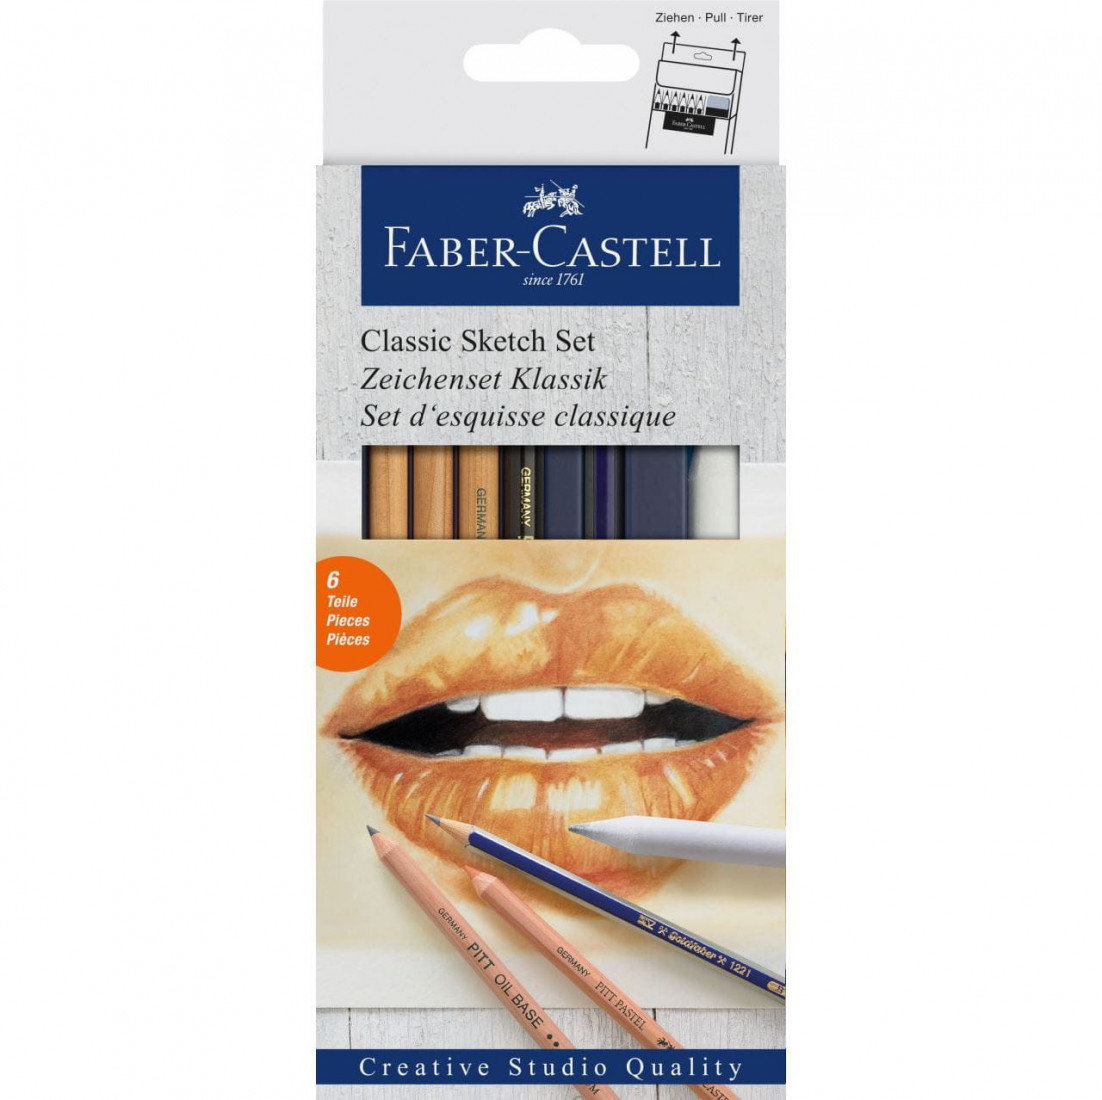 Faber Castell Classic Sketch Set 114004